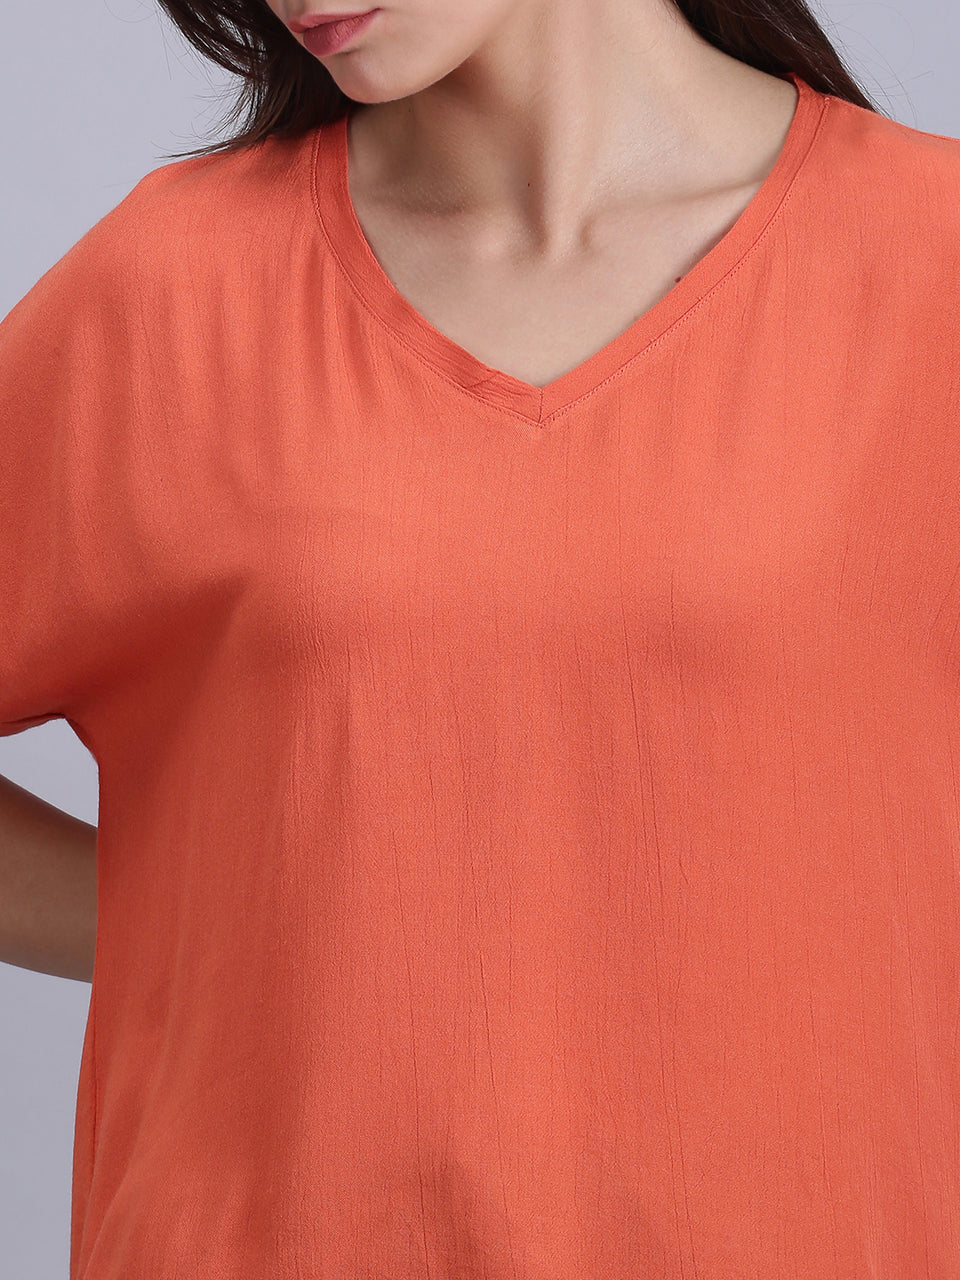 women solid orange v neck casual tops 